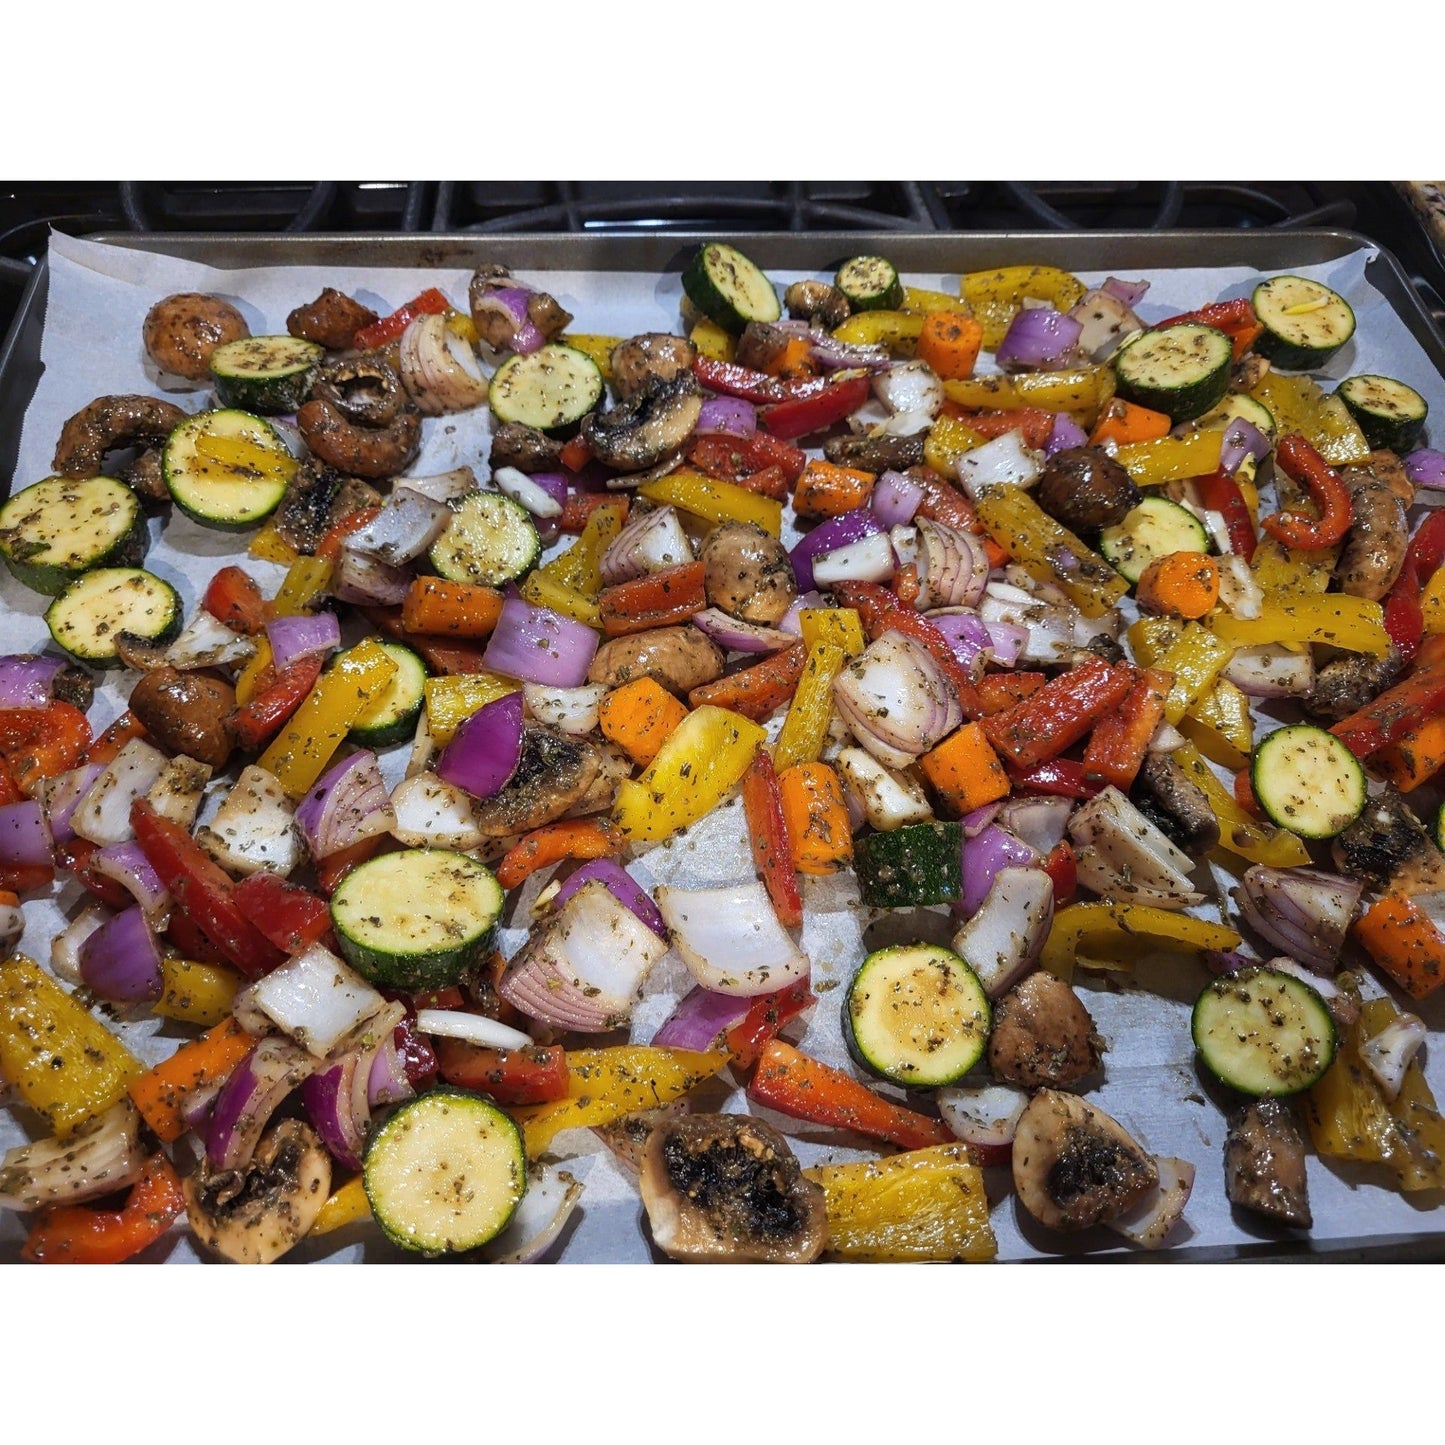 Greek Chicken with Roasted Vegetables Sheet Pan Meal Seasoning - Kitcheneez Mixes & More!